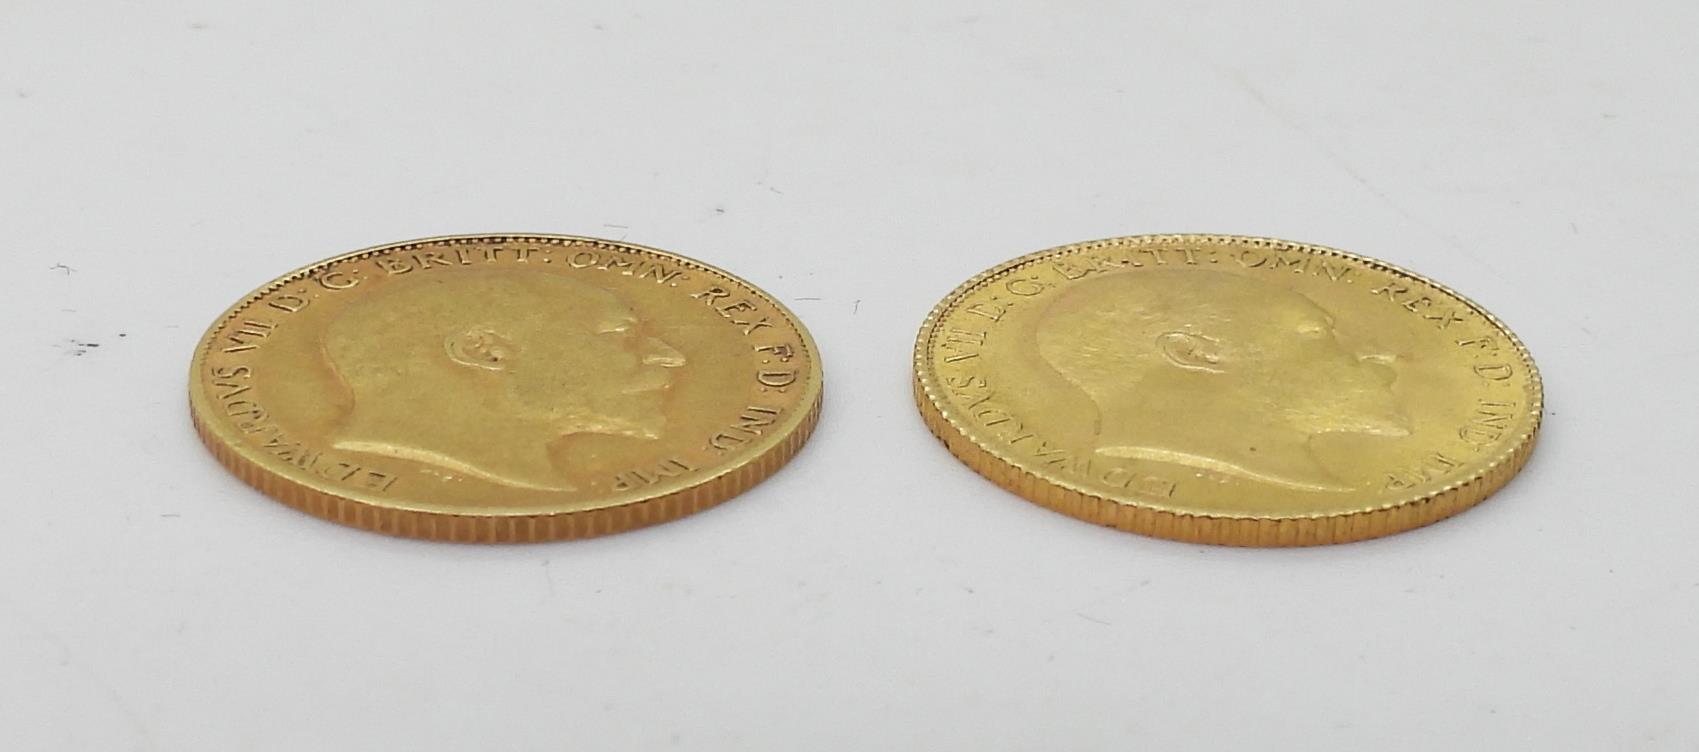 Edward VII (1901-1910) Half Sovereign Coins, 1902 4 grams, 1906 4 grams Obverse Portrait of King - Image 3 of 3